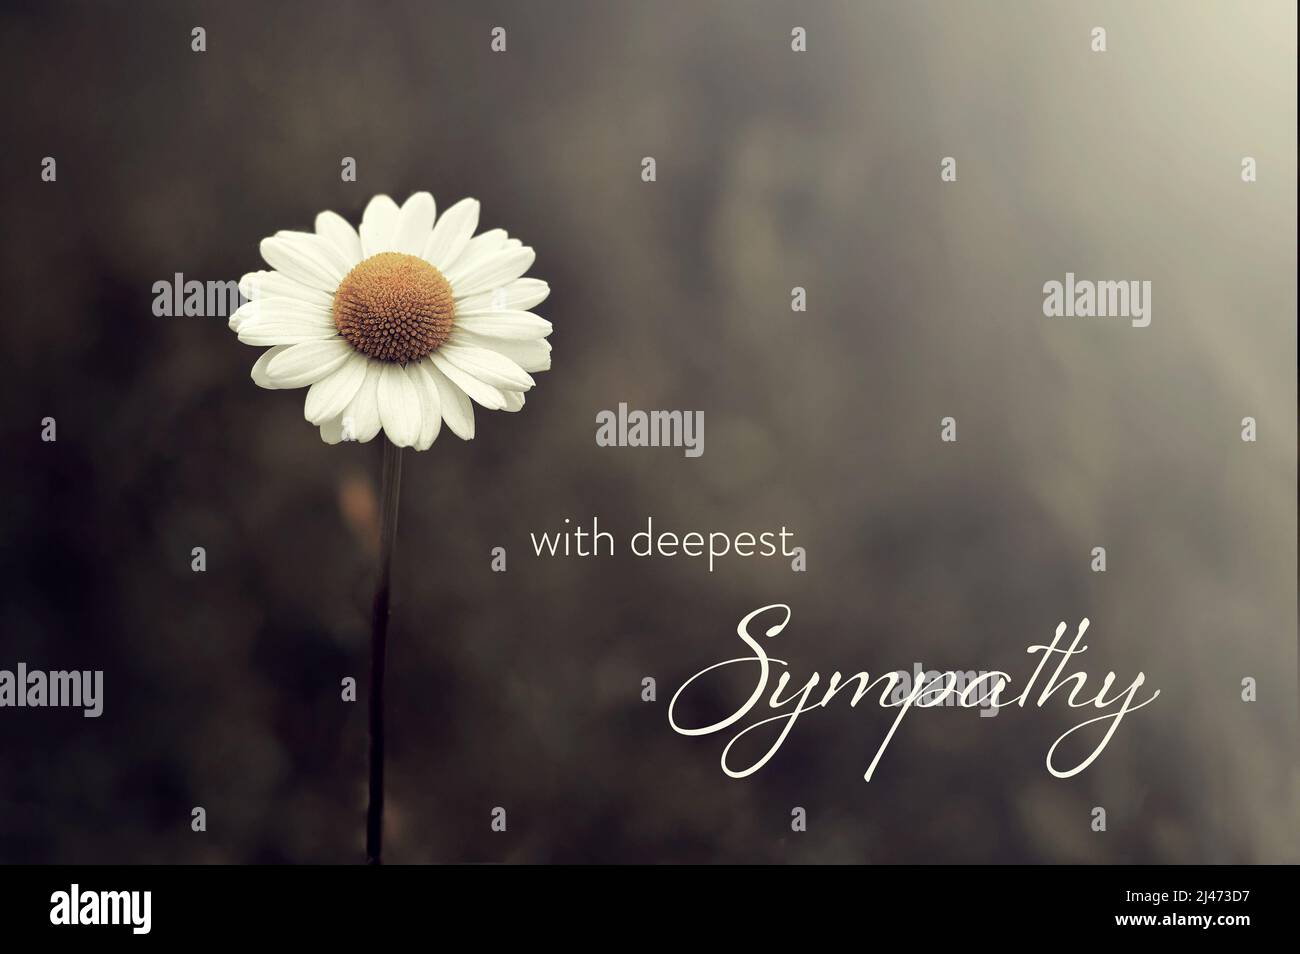 Sympathy card with daisy flower on dark background Stock Photo